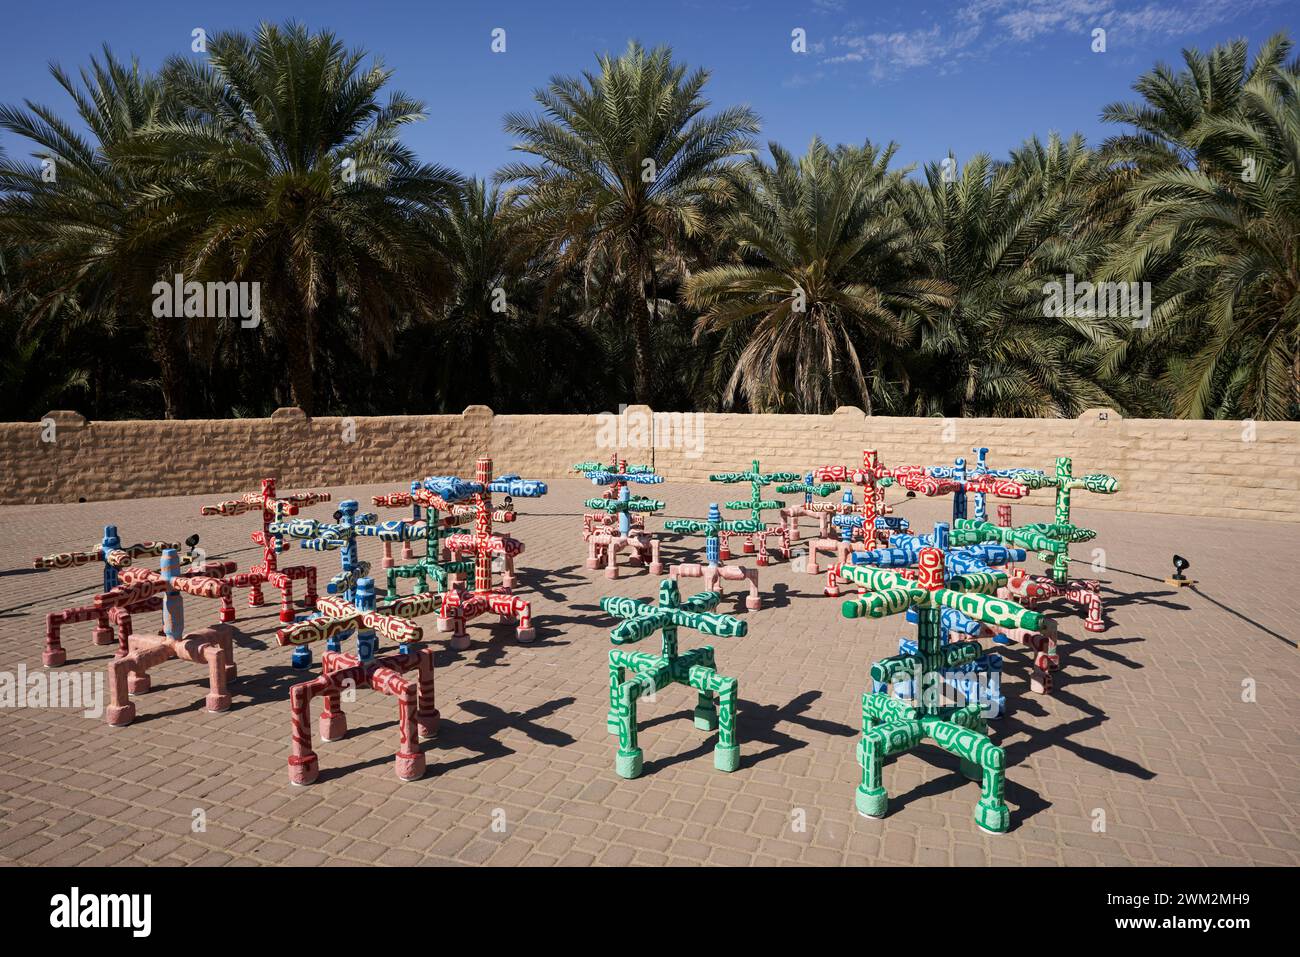 Mohamed Ahmed Ibrahim Installation namens Al Ain Oasis in Al Ain. Es wurde von Abu Dhabi Art. In Auftrag gegeben Stockfoto